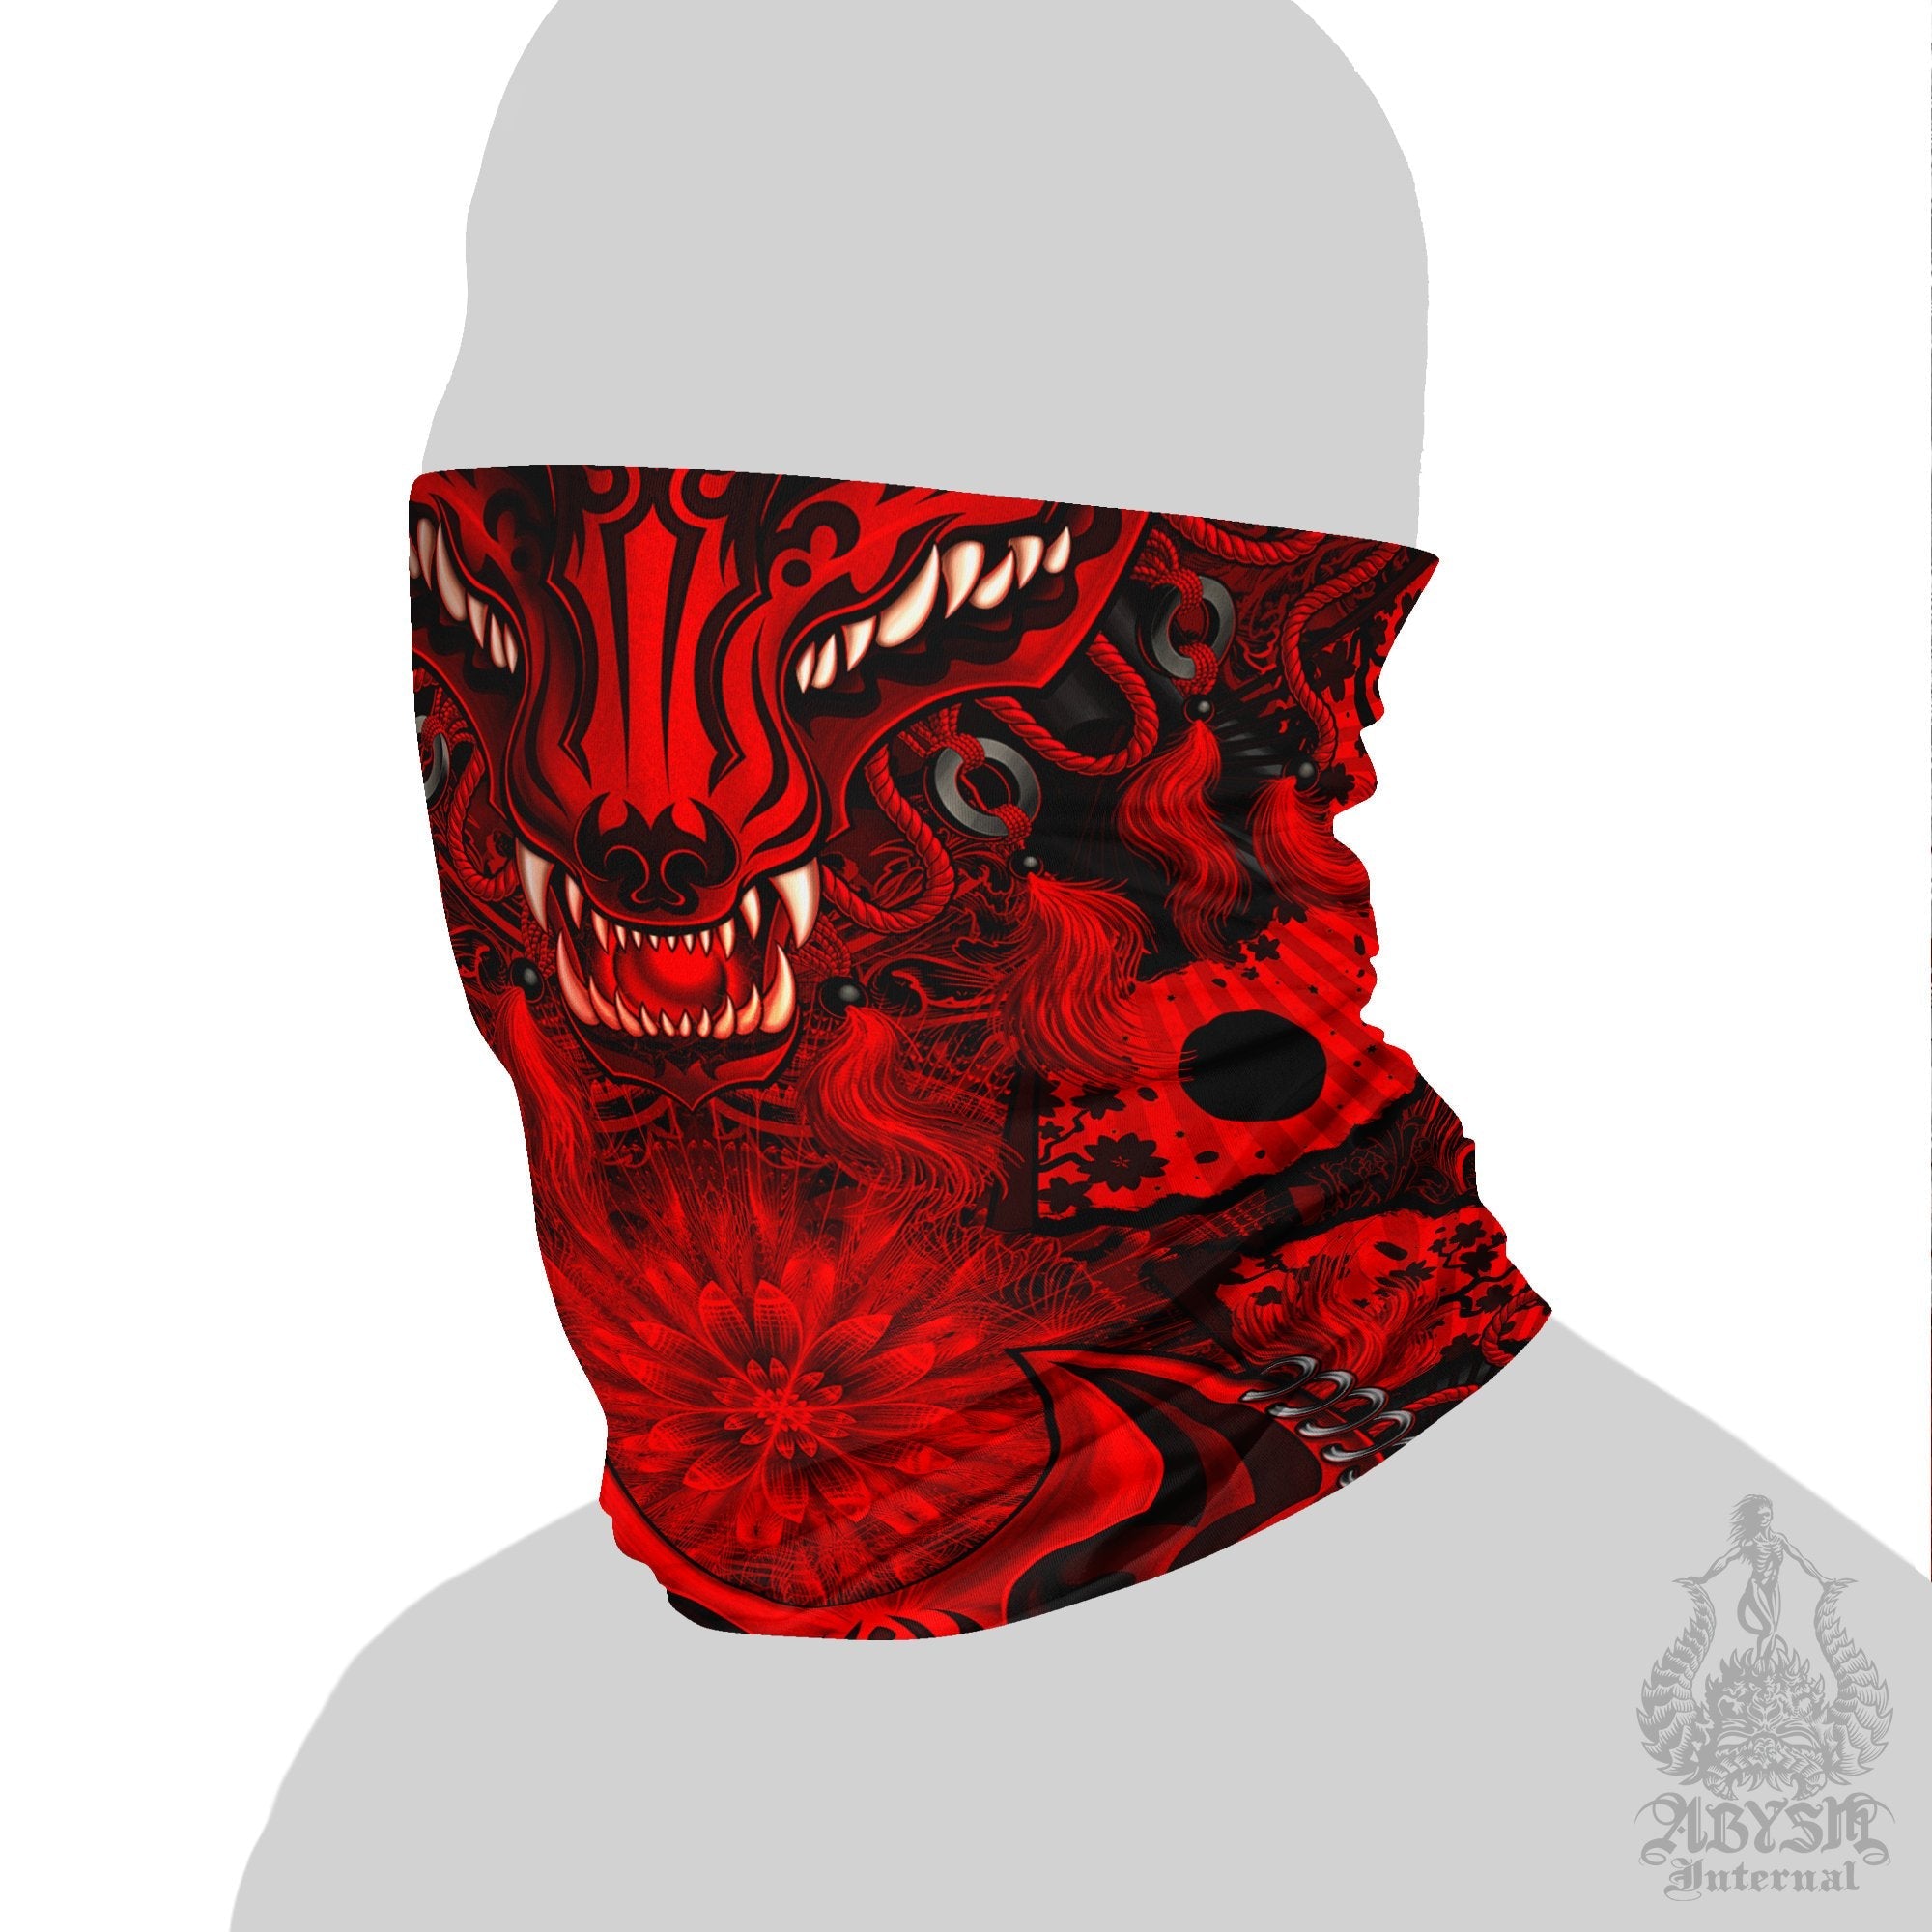 Masked Rogue Shinobi (COVERS HEAD)